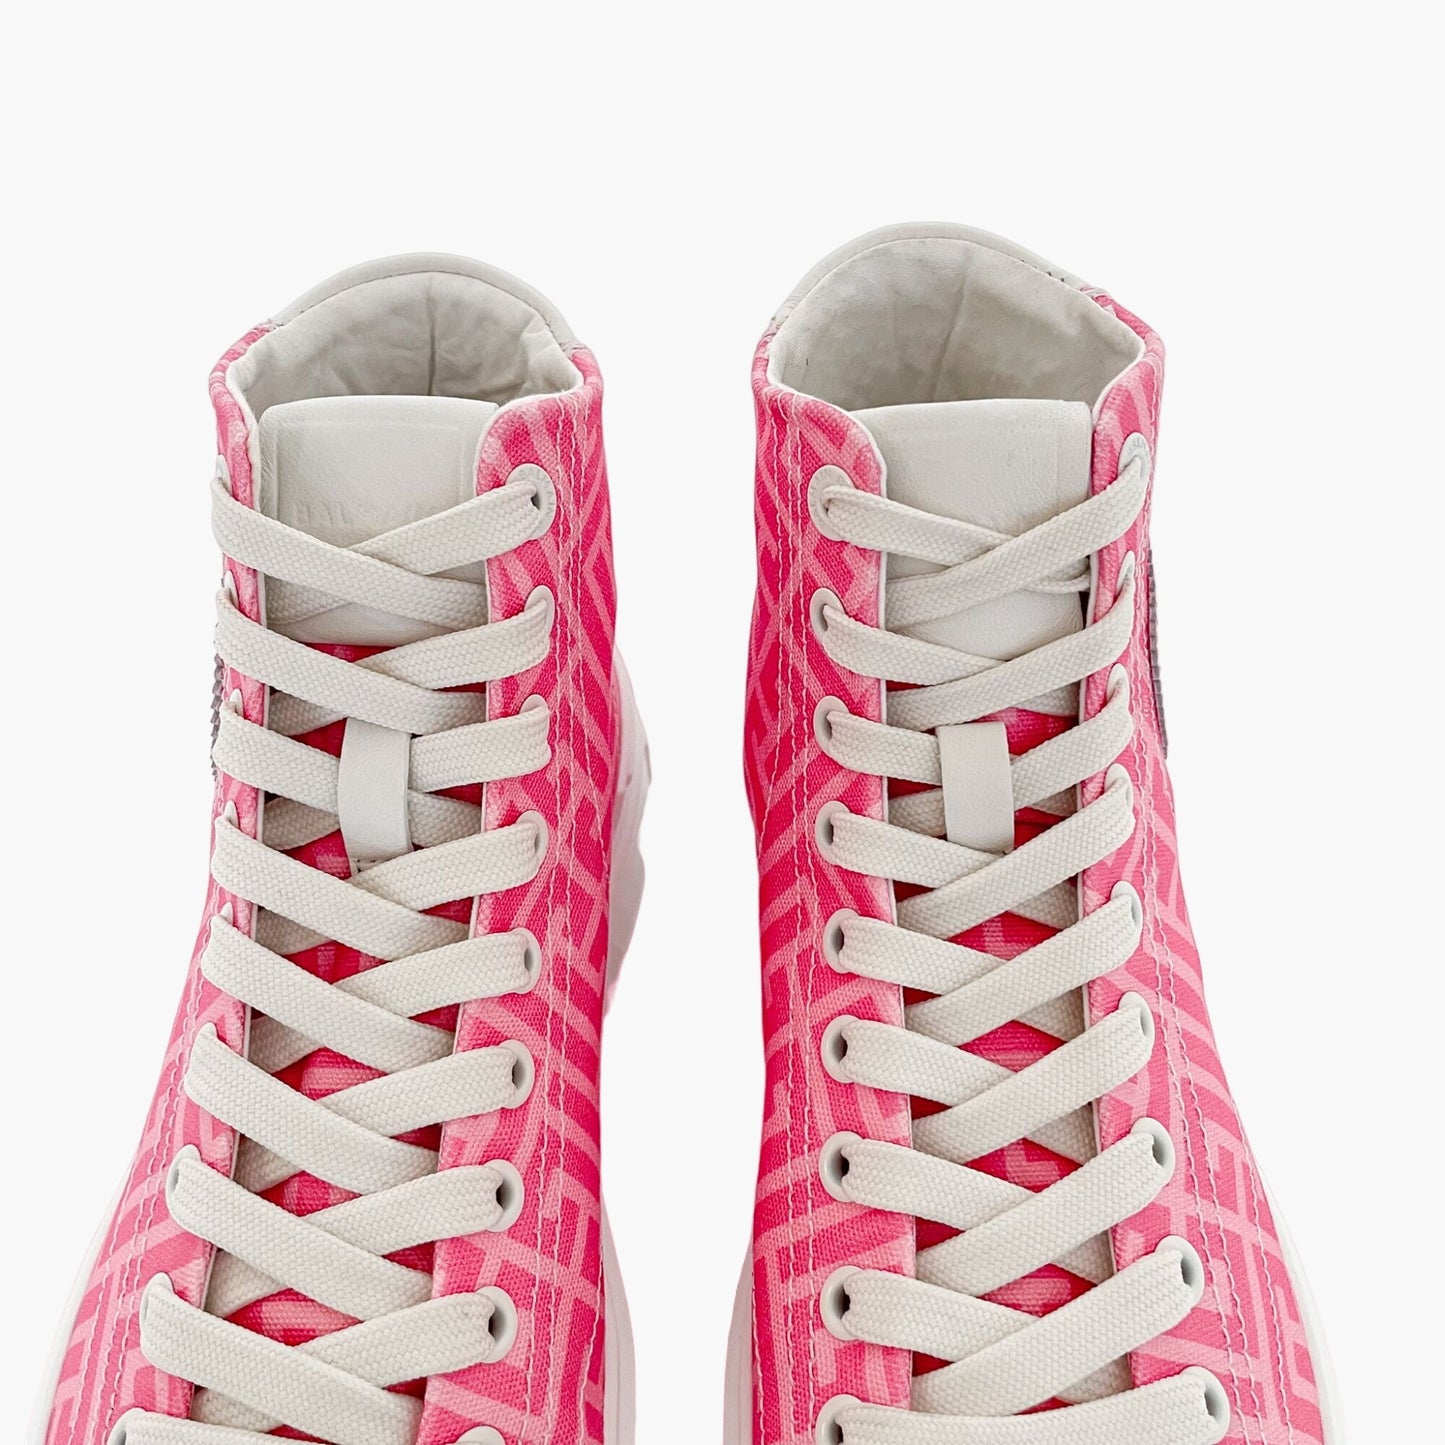 Balmain Barbie B Court Monogram High Top Sneakers Size 36